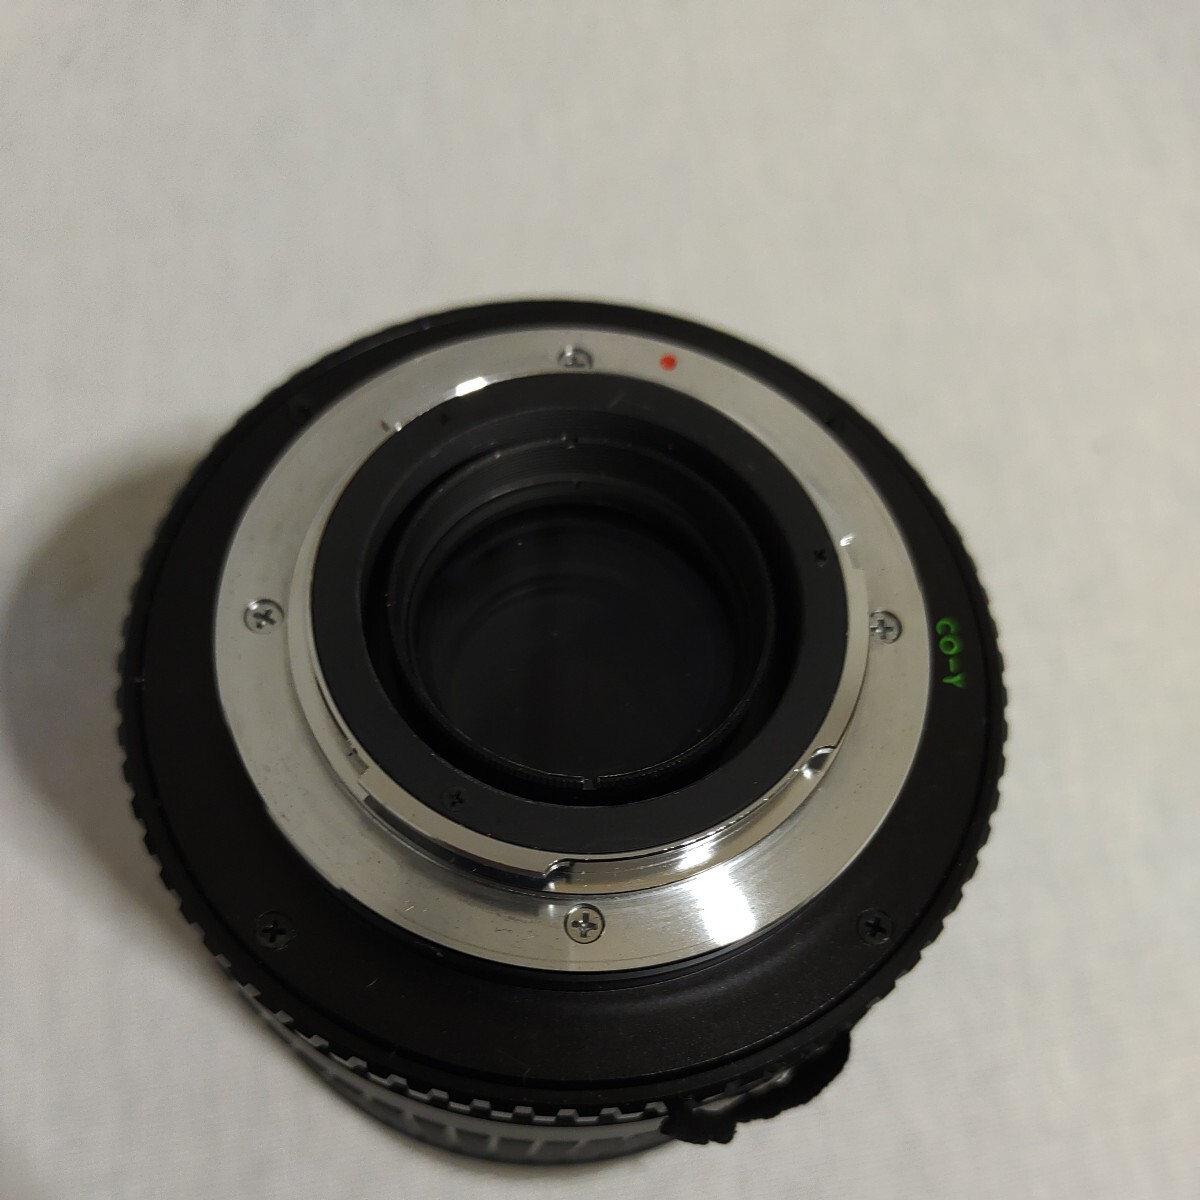 F0011 REFLEX MAKINON MC lens 